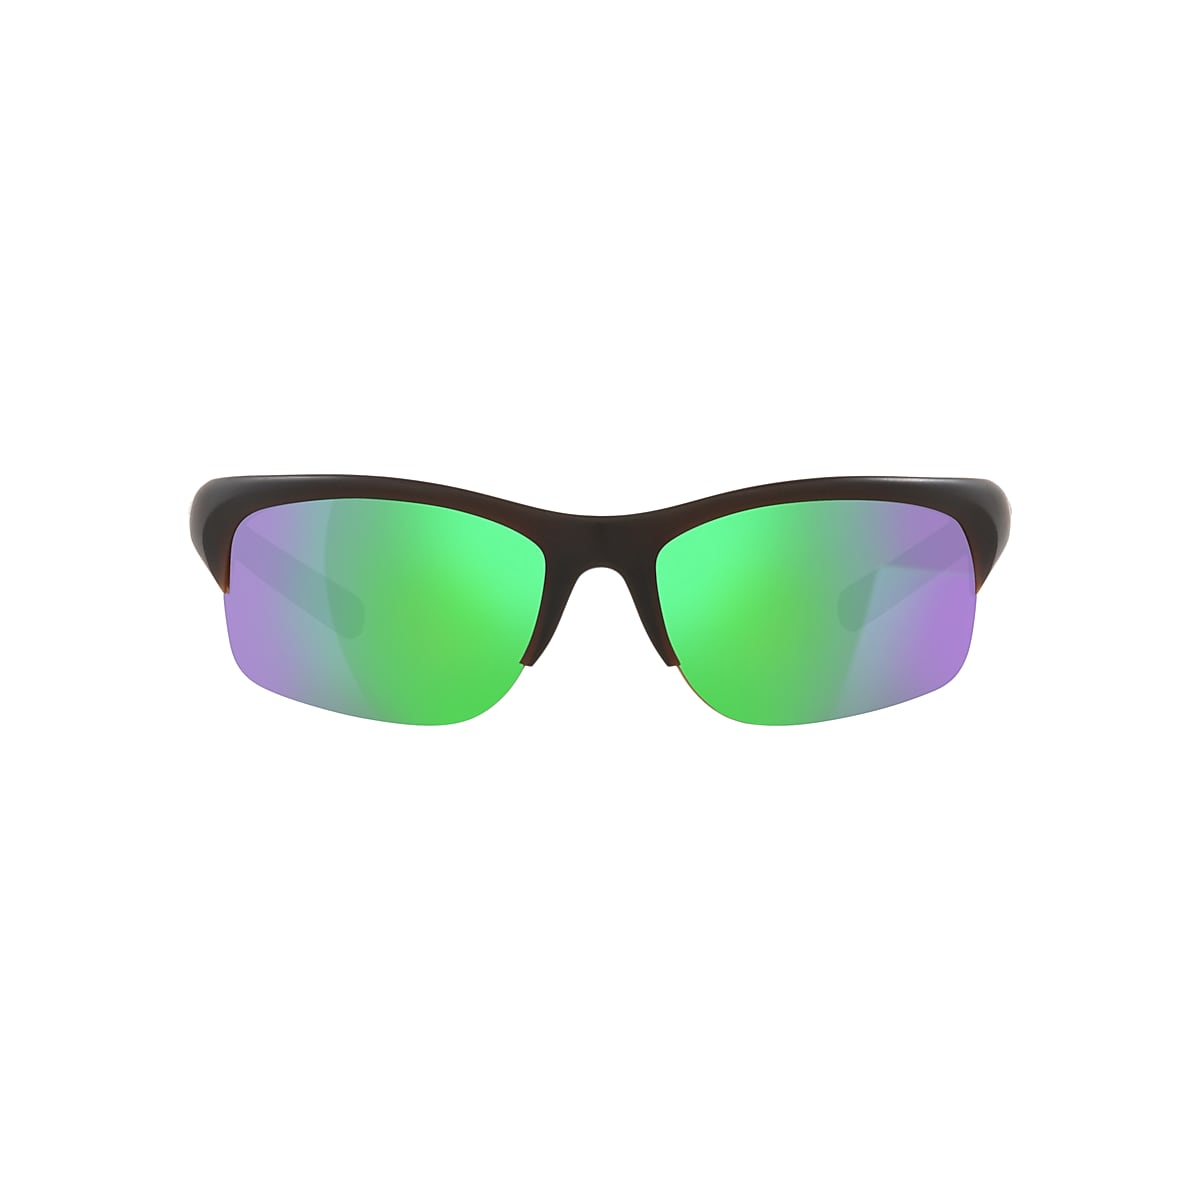 Endura XP Sunglasses in Green Reflex | Native Eyewear®